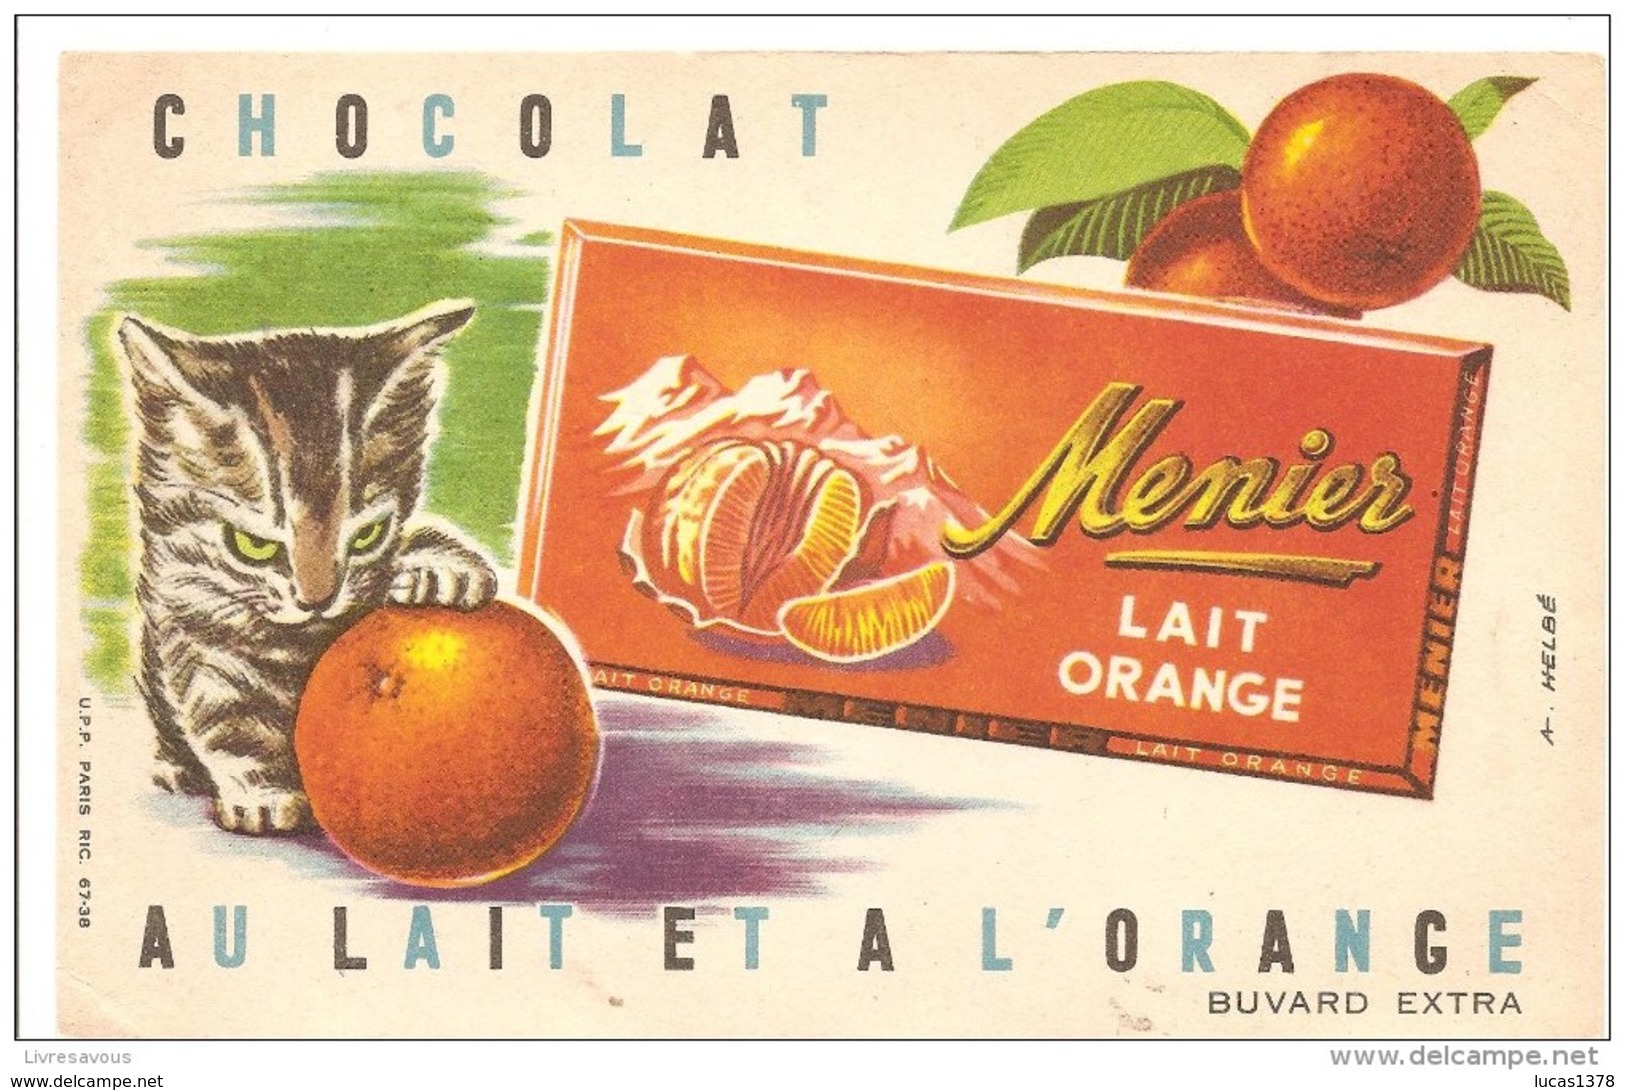 CHOCOLAT MENIER / LAIT ORANGE - Chocolat